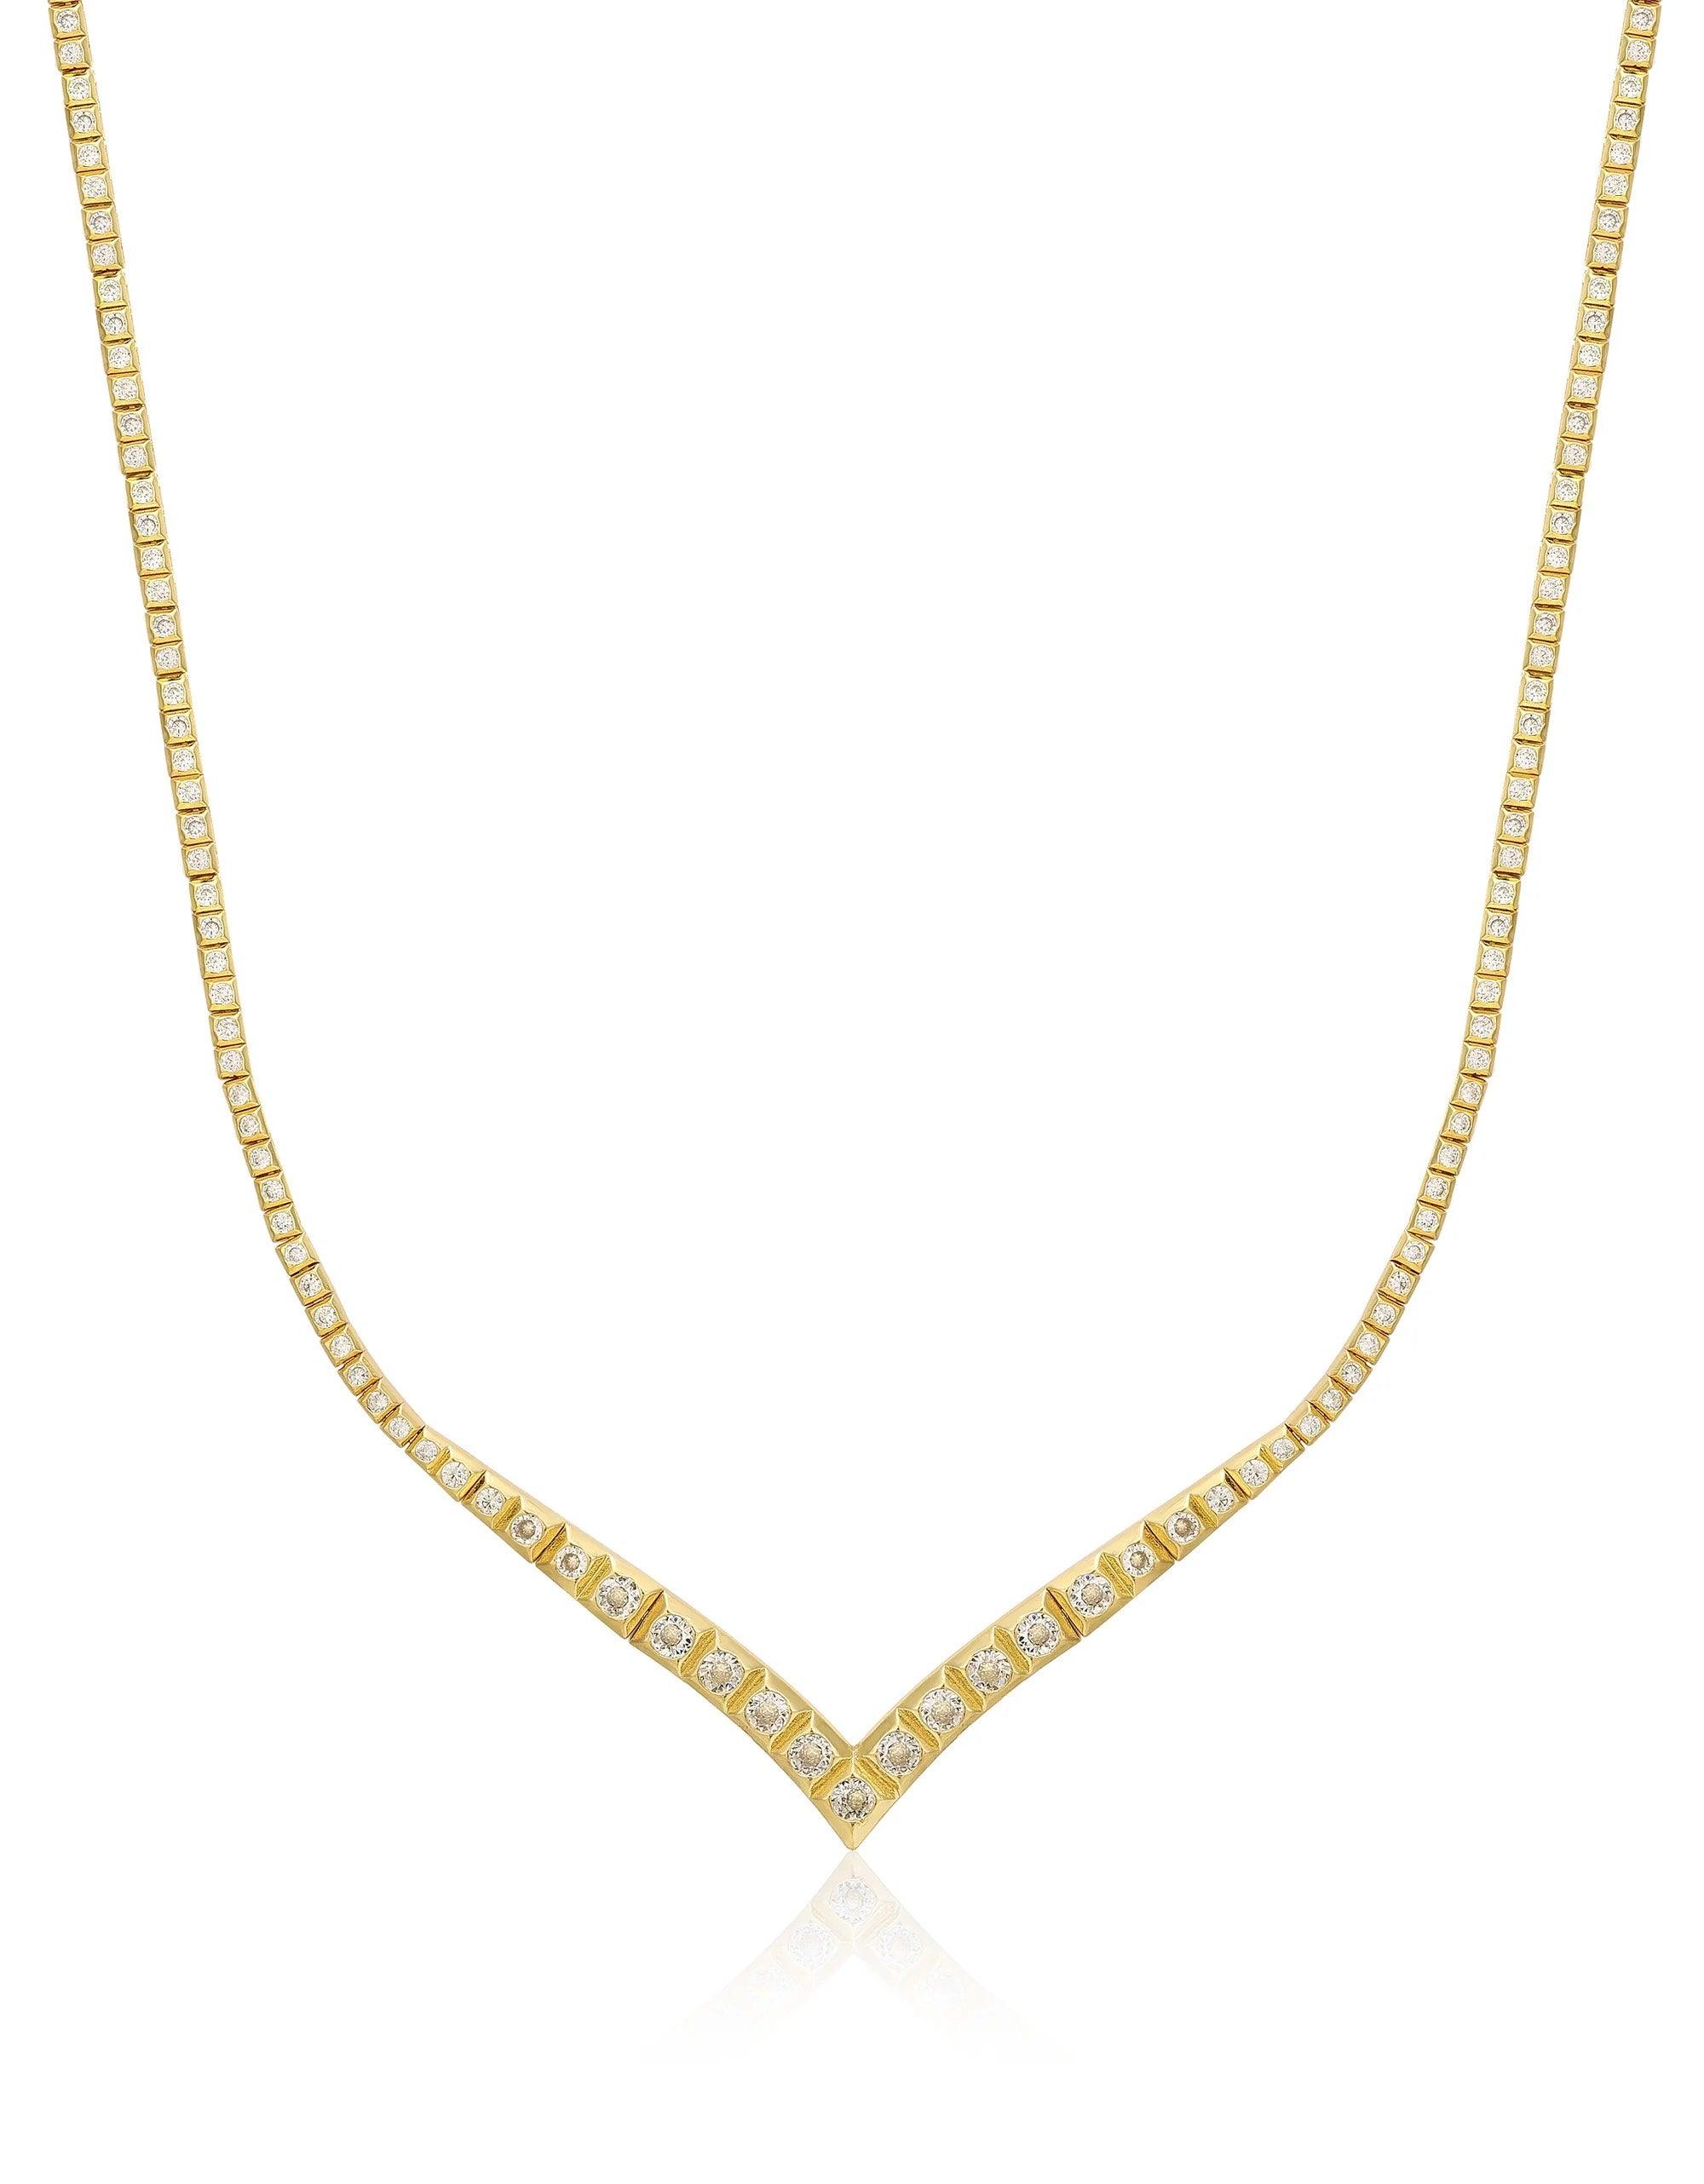 Pyramid V Tennis Necklace - Gold - Flutter